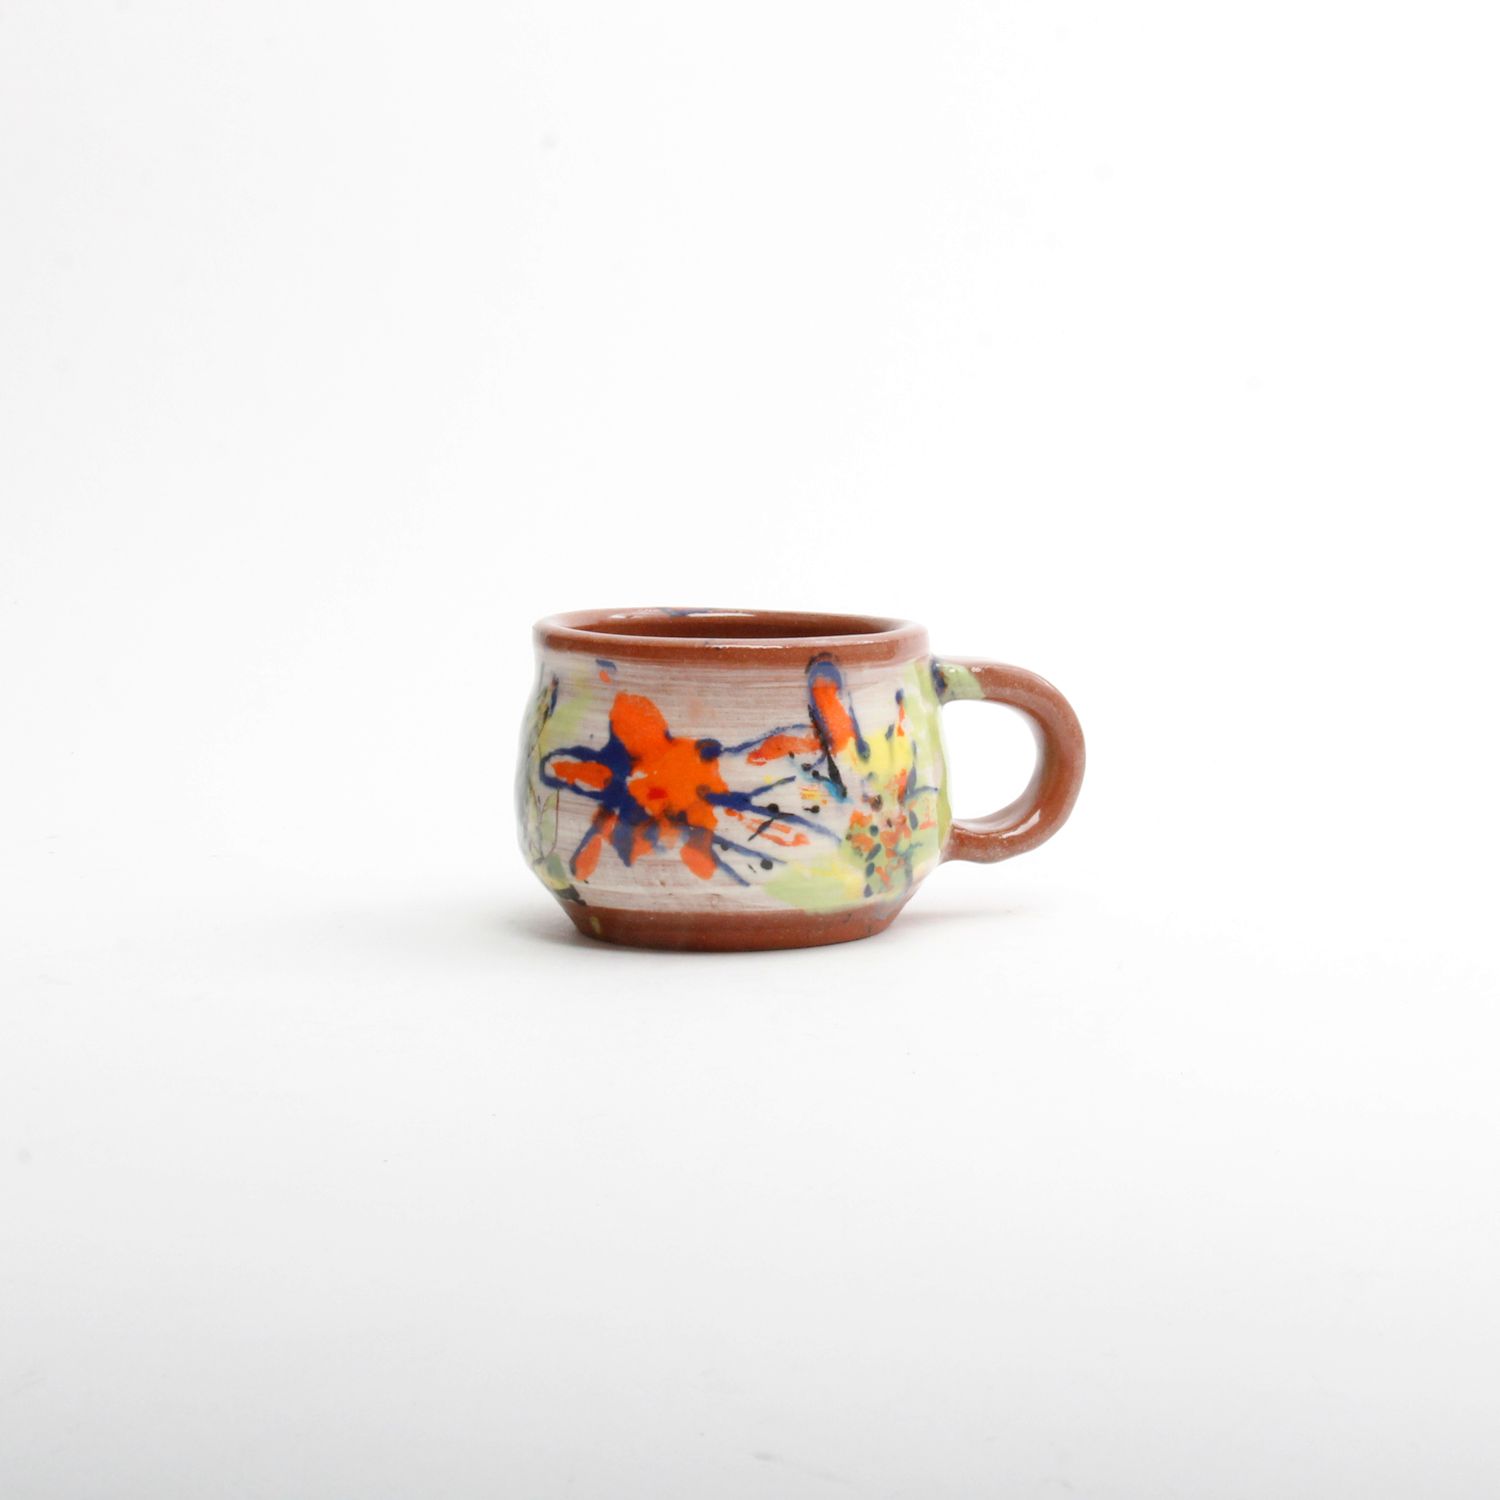 Annie McDonald: Garden mug Product Image 1 of 3